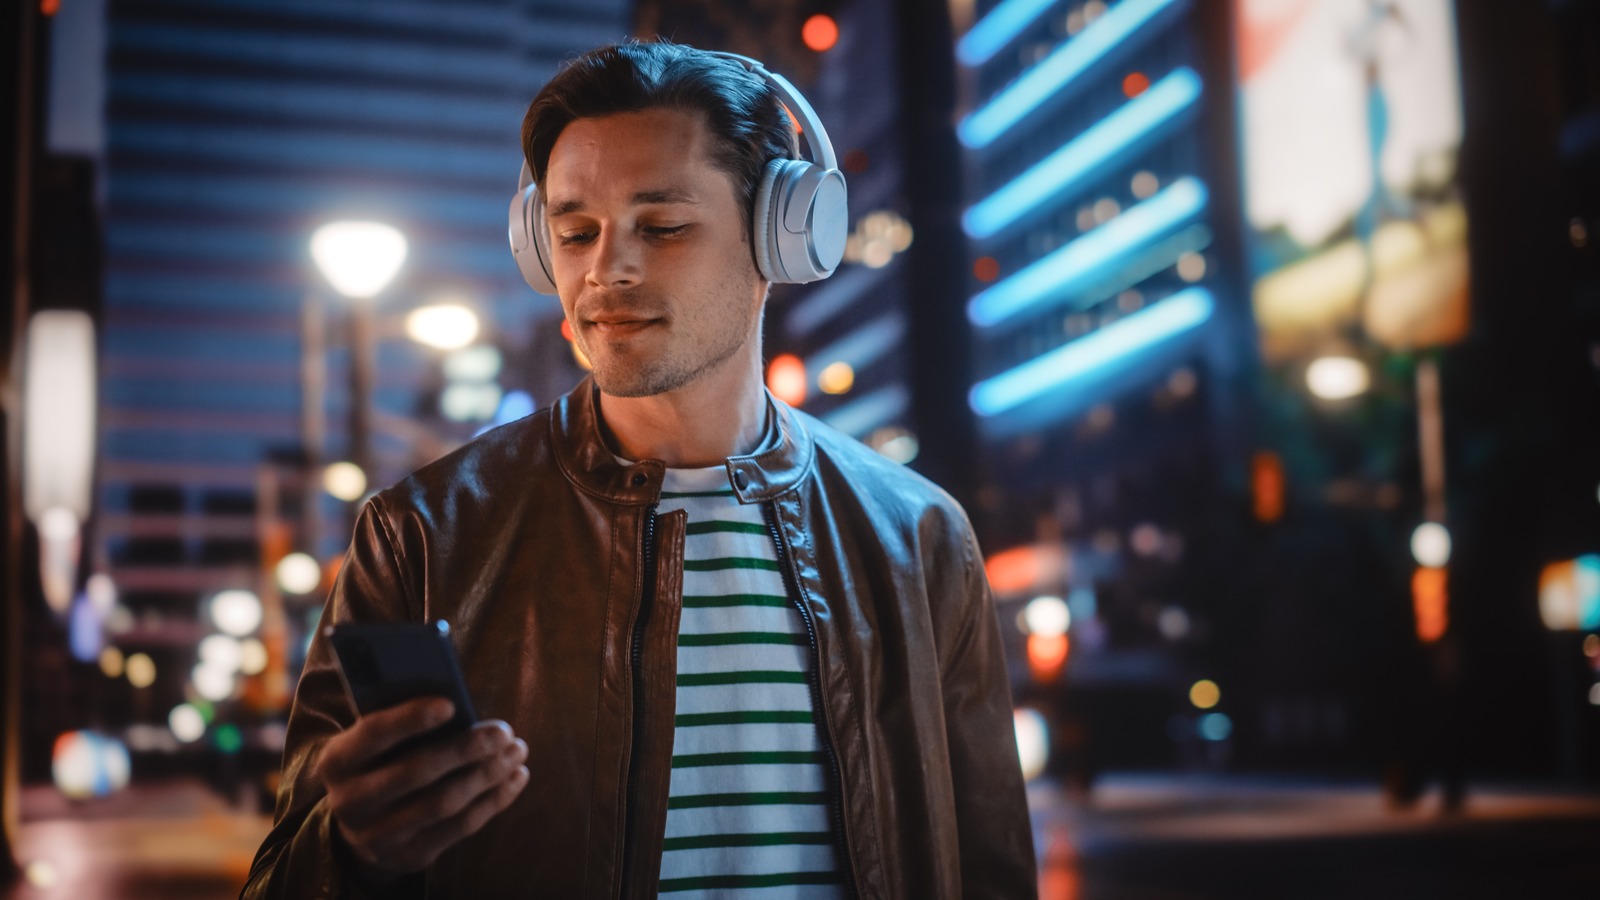 AKG K52 headphones review: A good choice for a clean, balanced sound